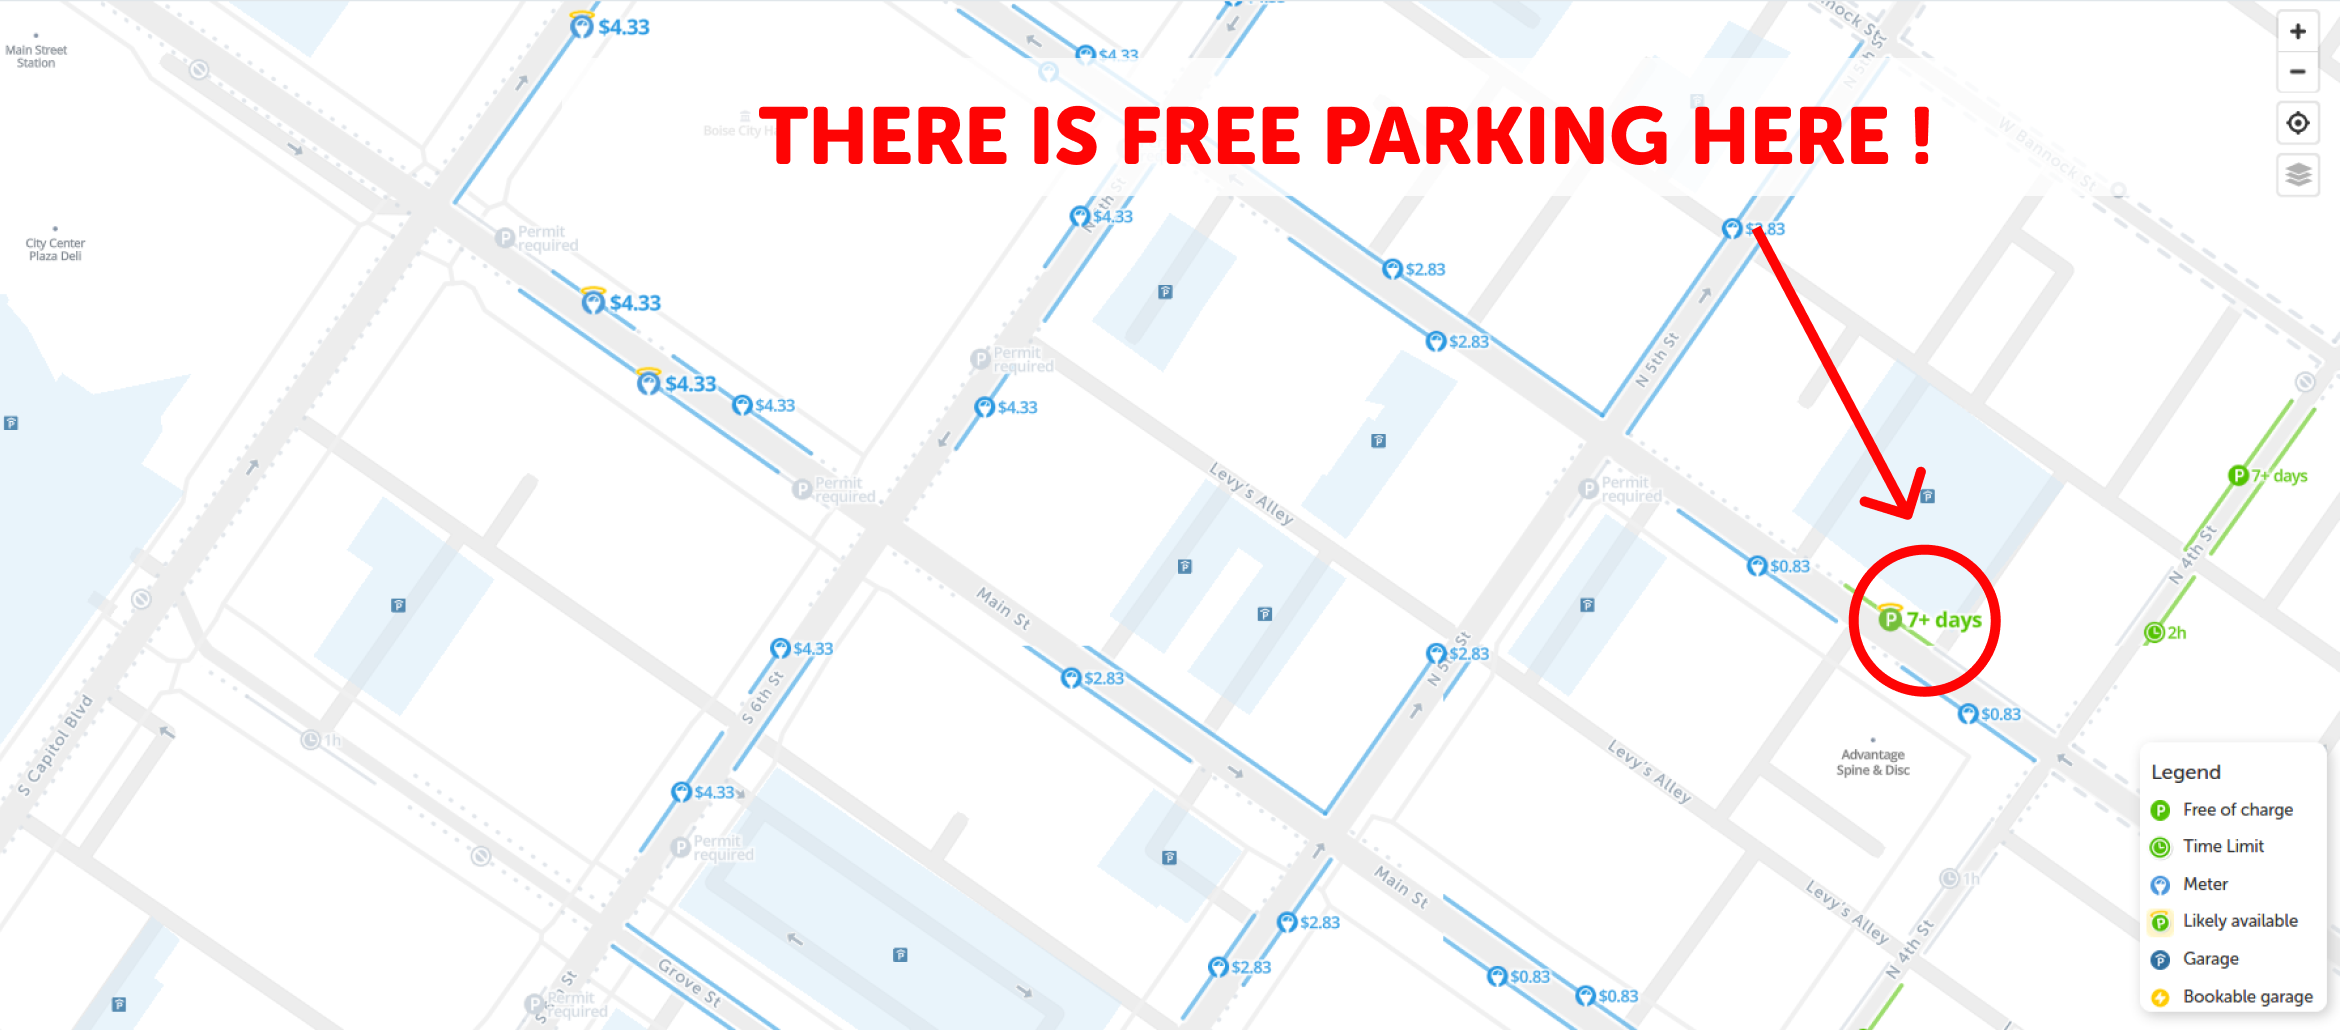 map of free parking in Boise City - SpotAngels